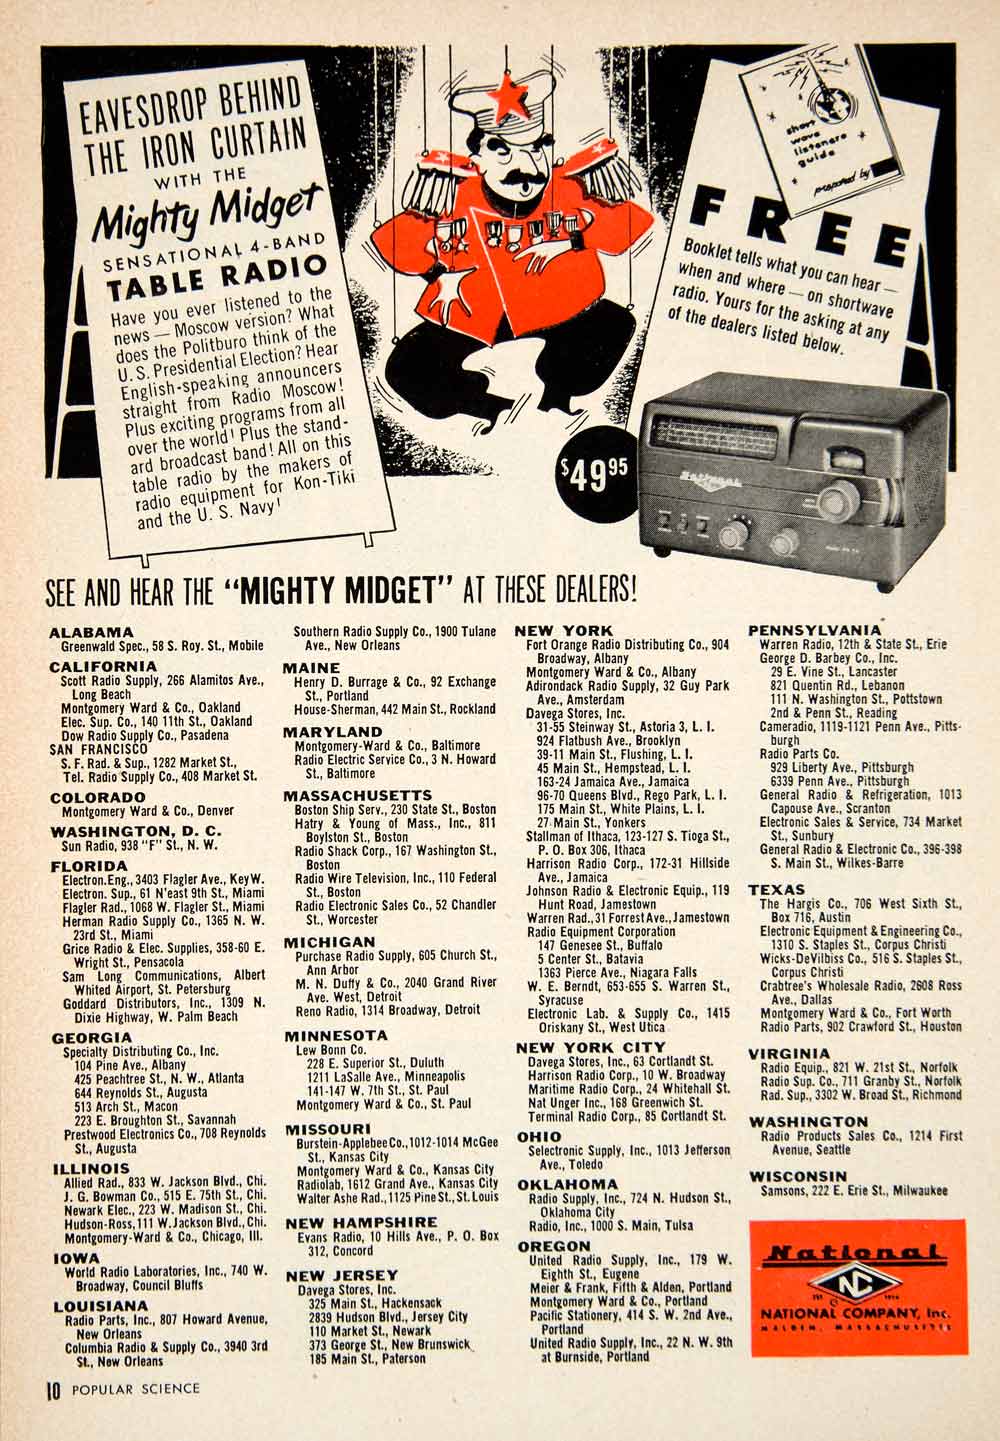 1952 Ad Mighty Midget Table Radio 4-Band Hargis Cameradio Davega Iron PSC2